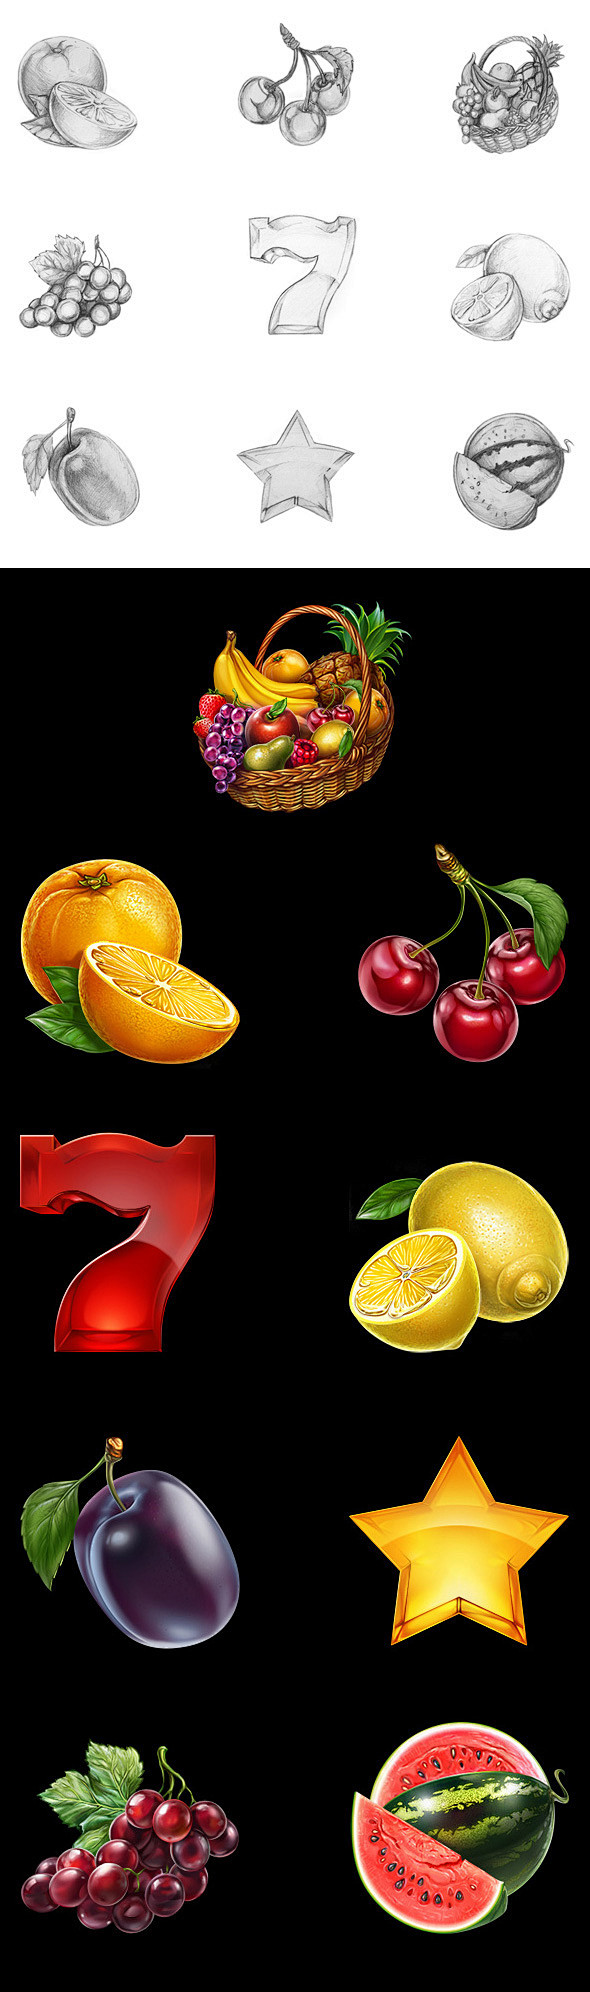 Fruit icons : Develo...